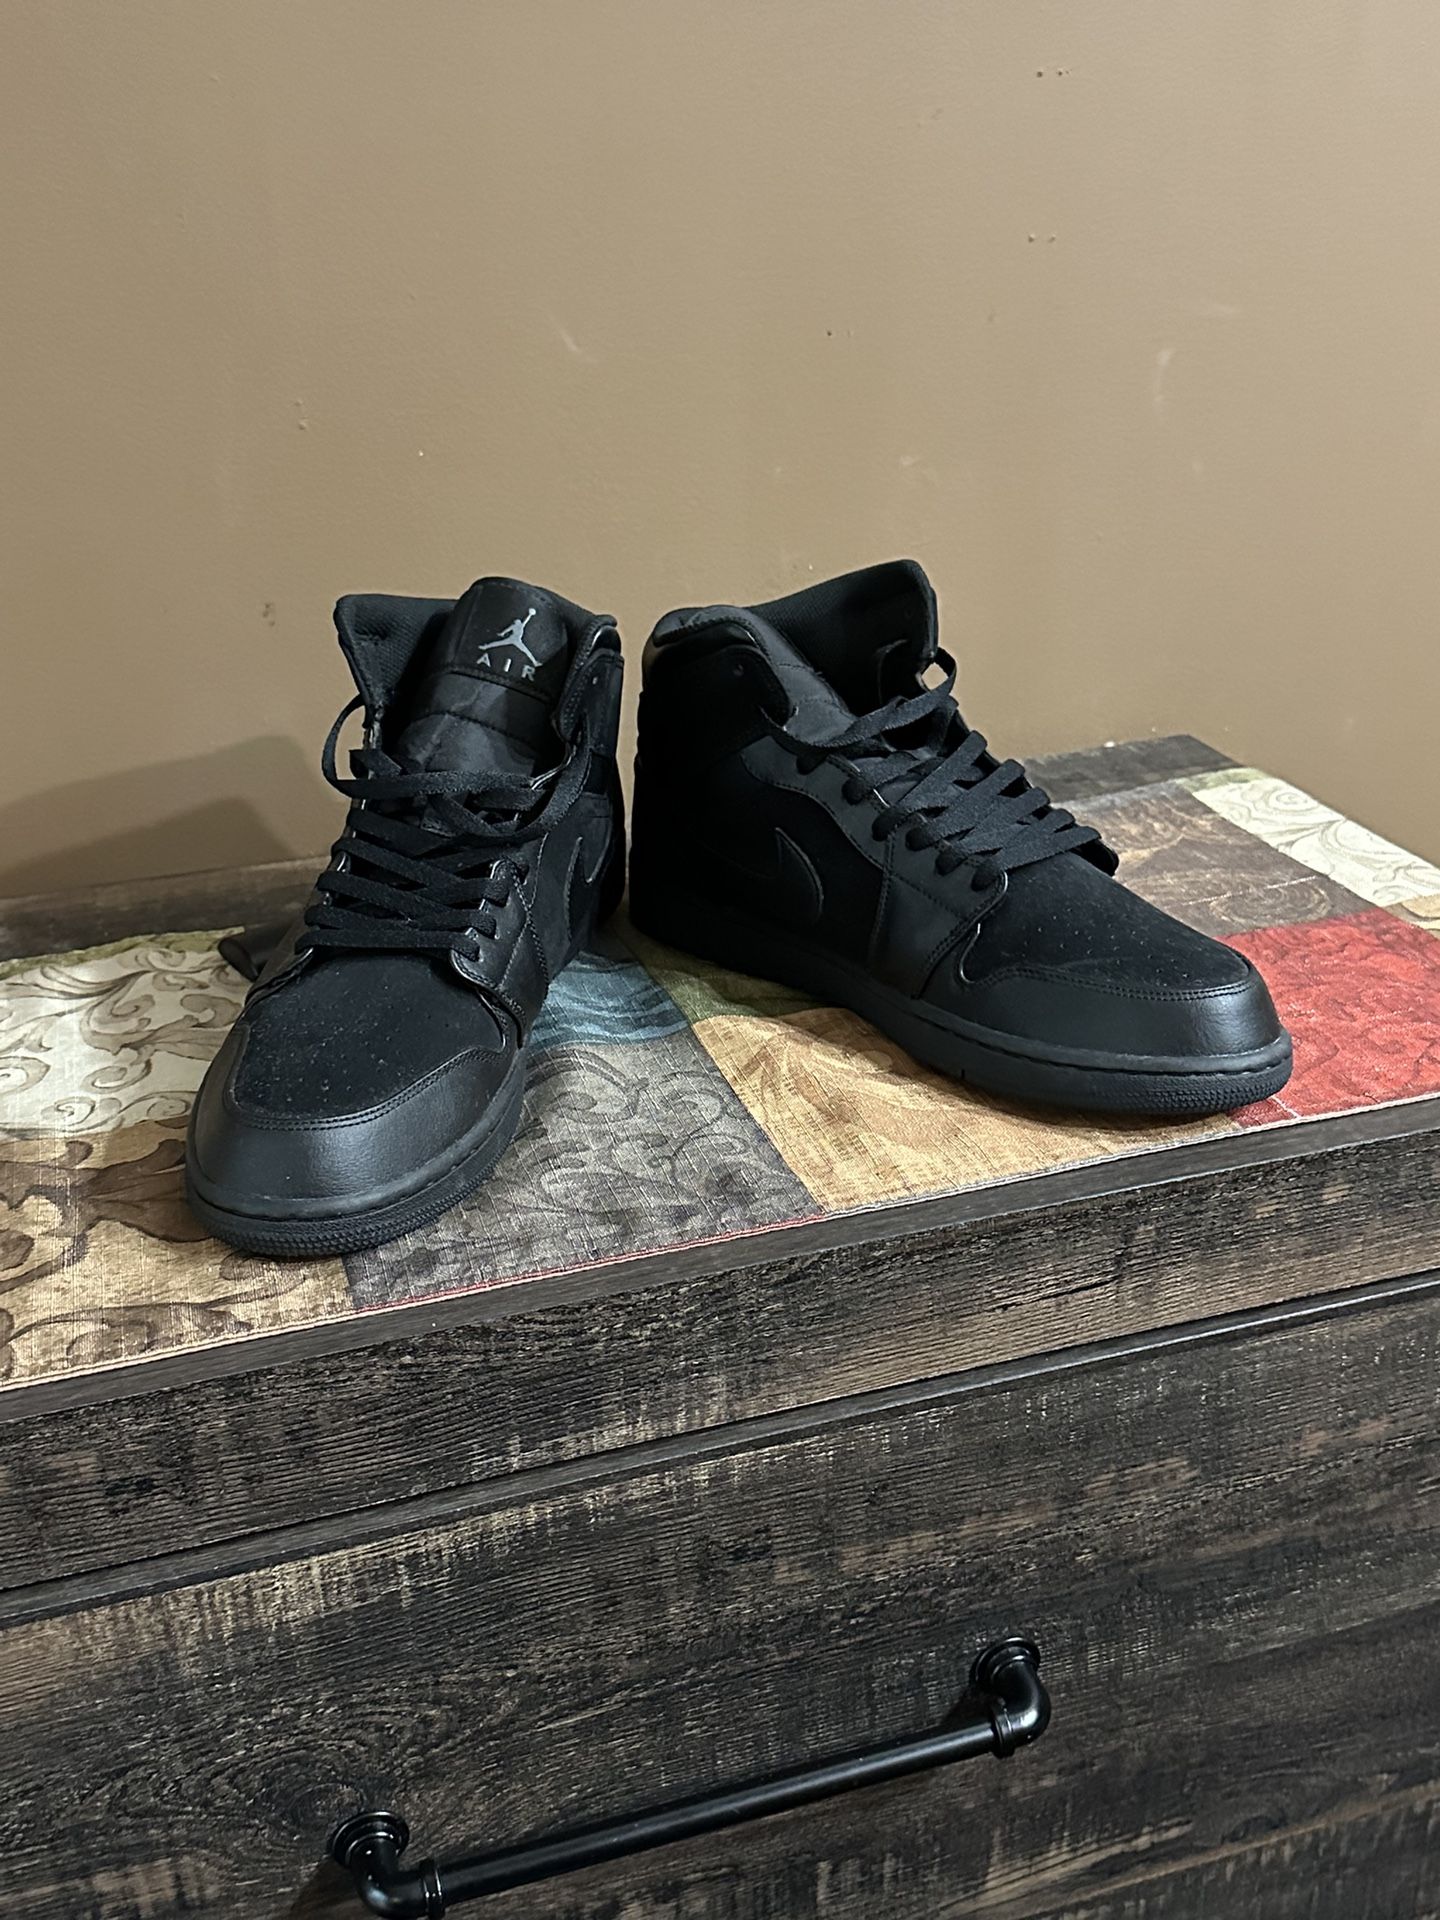 Jordan 1 Black/Black Size 14